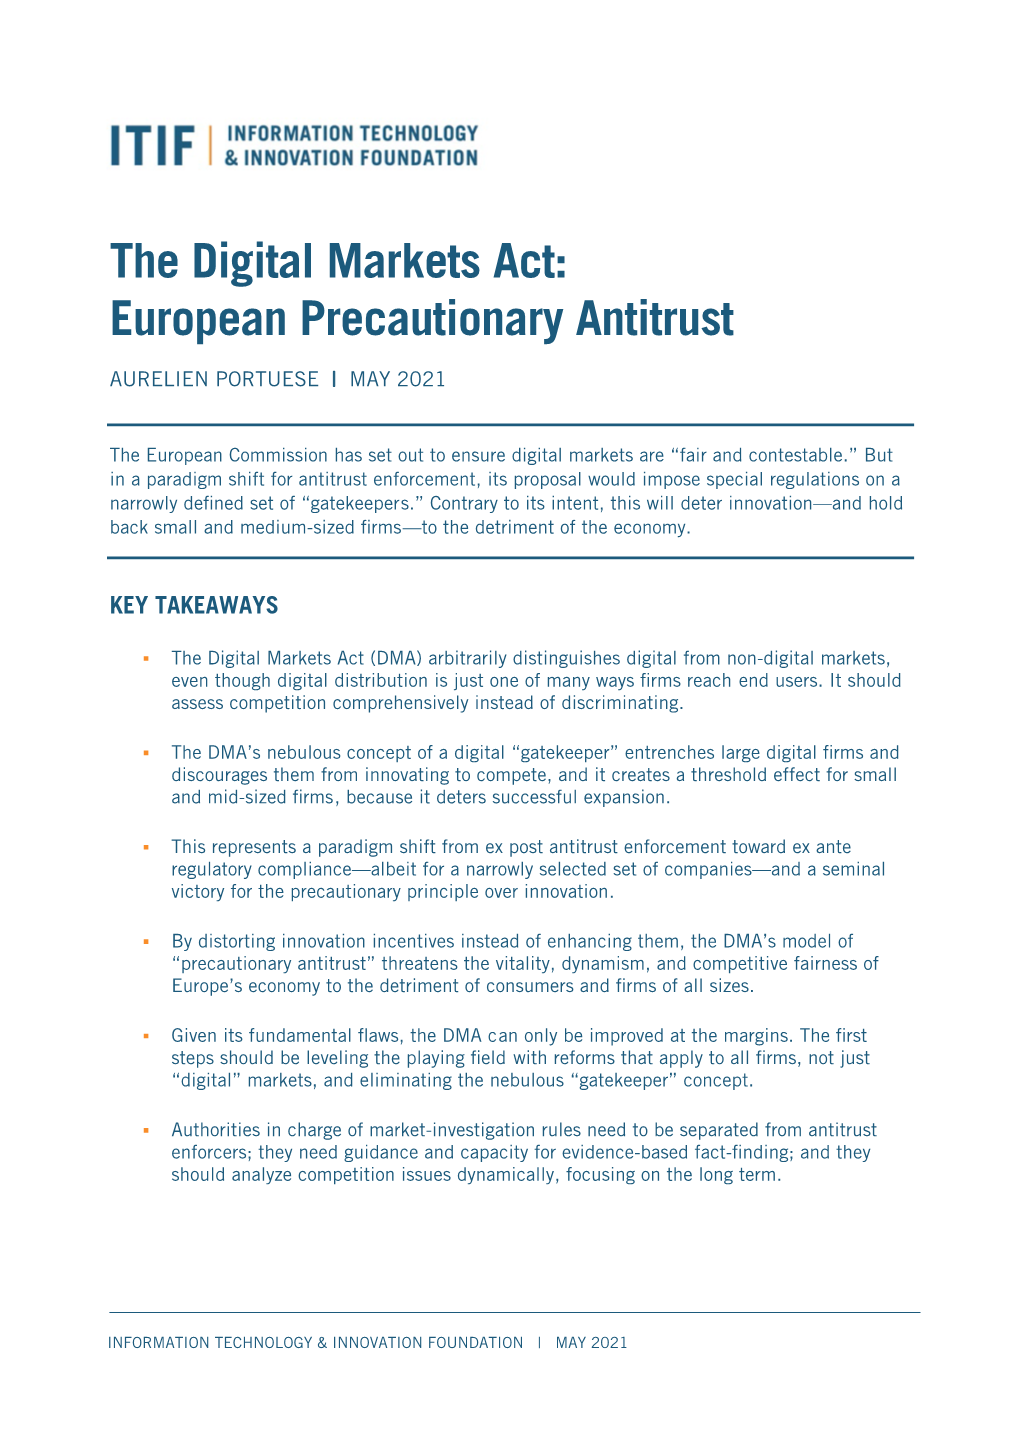 The Digital Markets Act: European Precautionary Antitrust